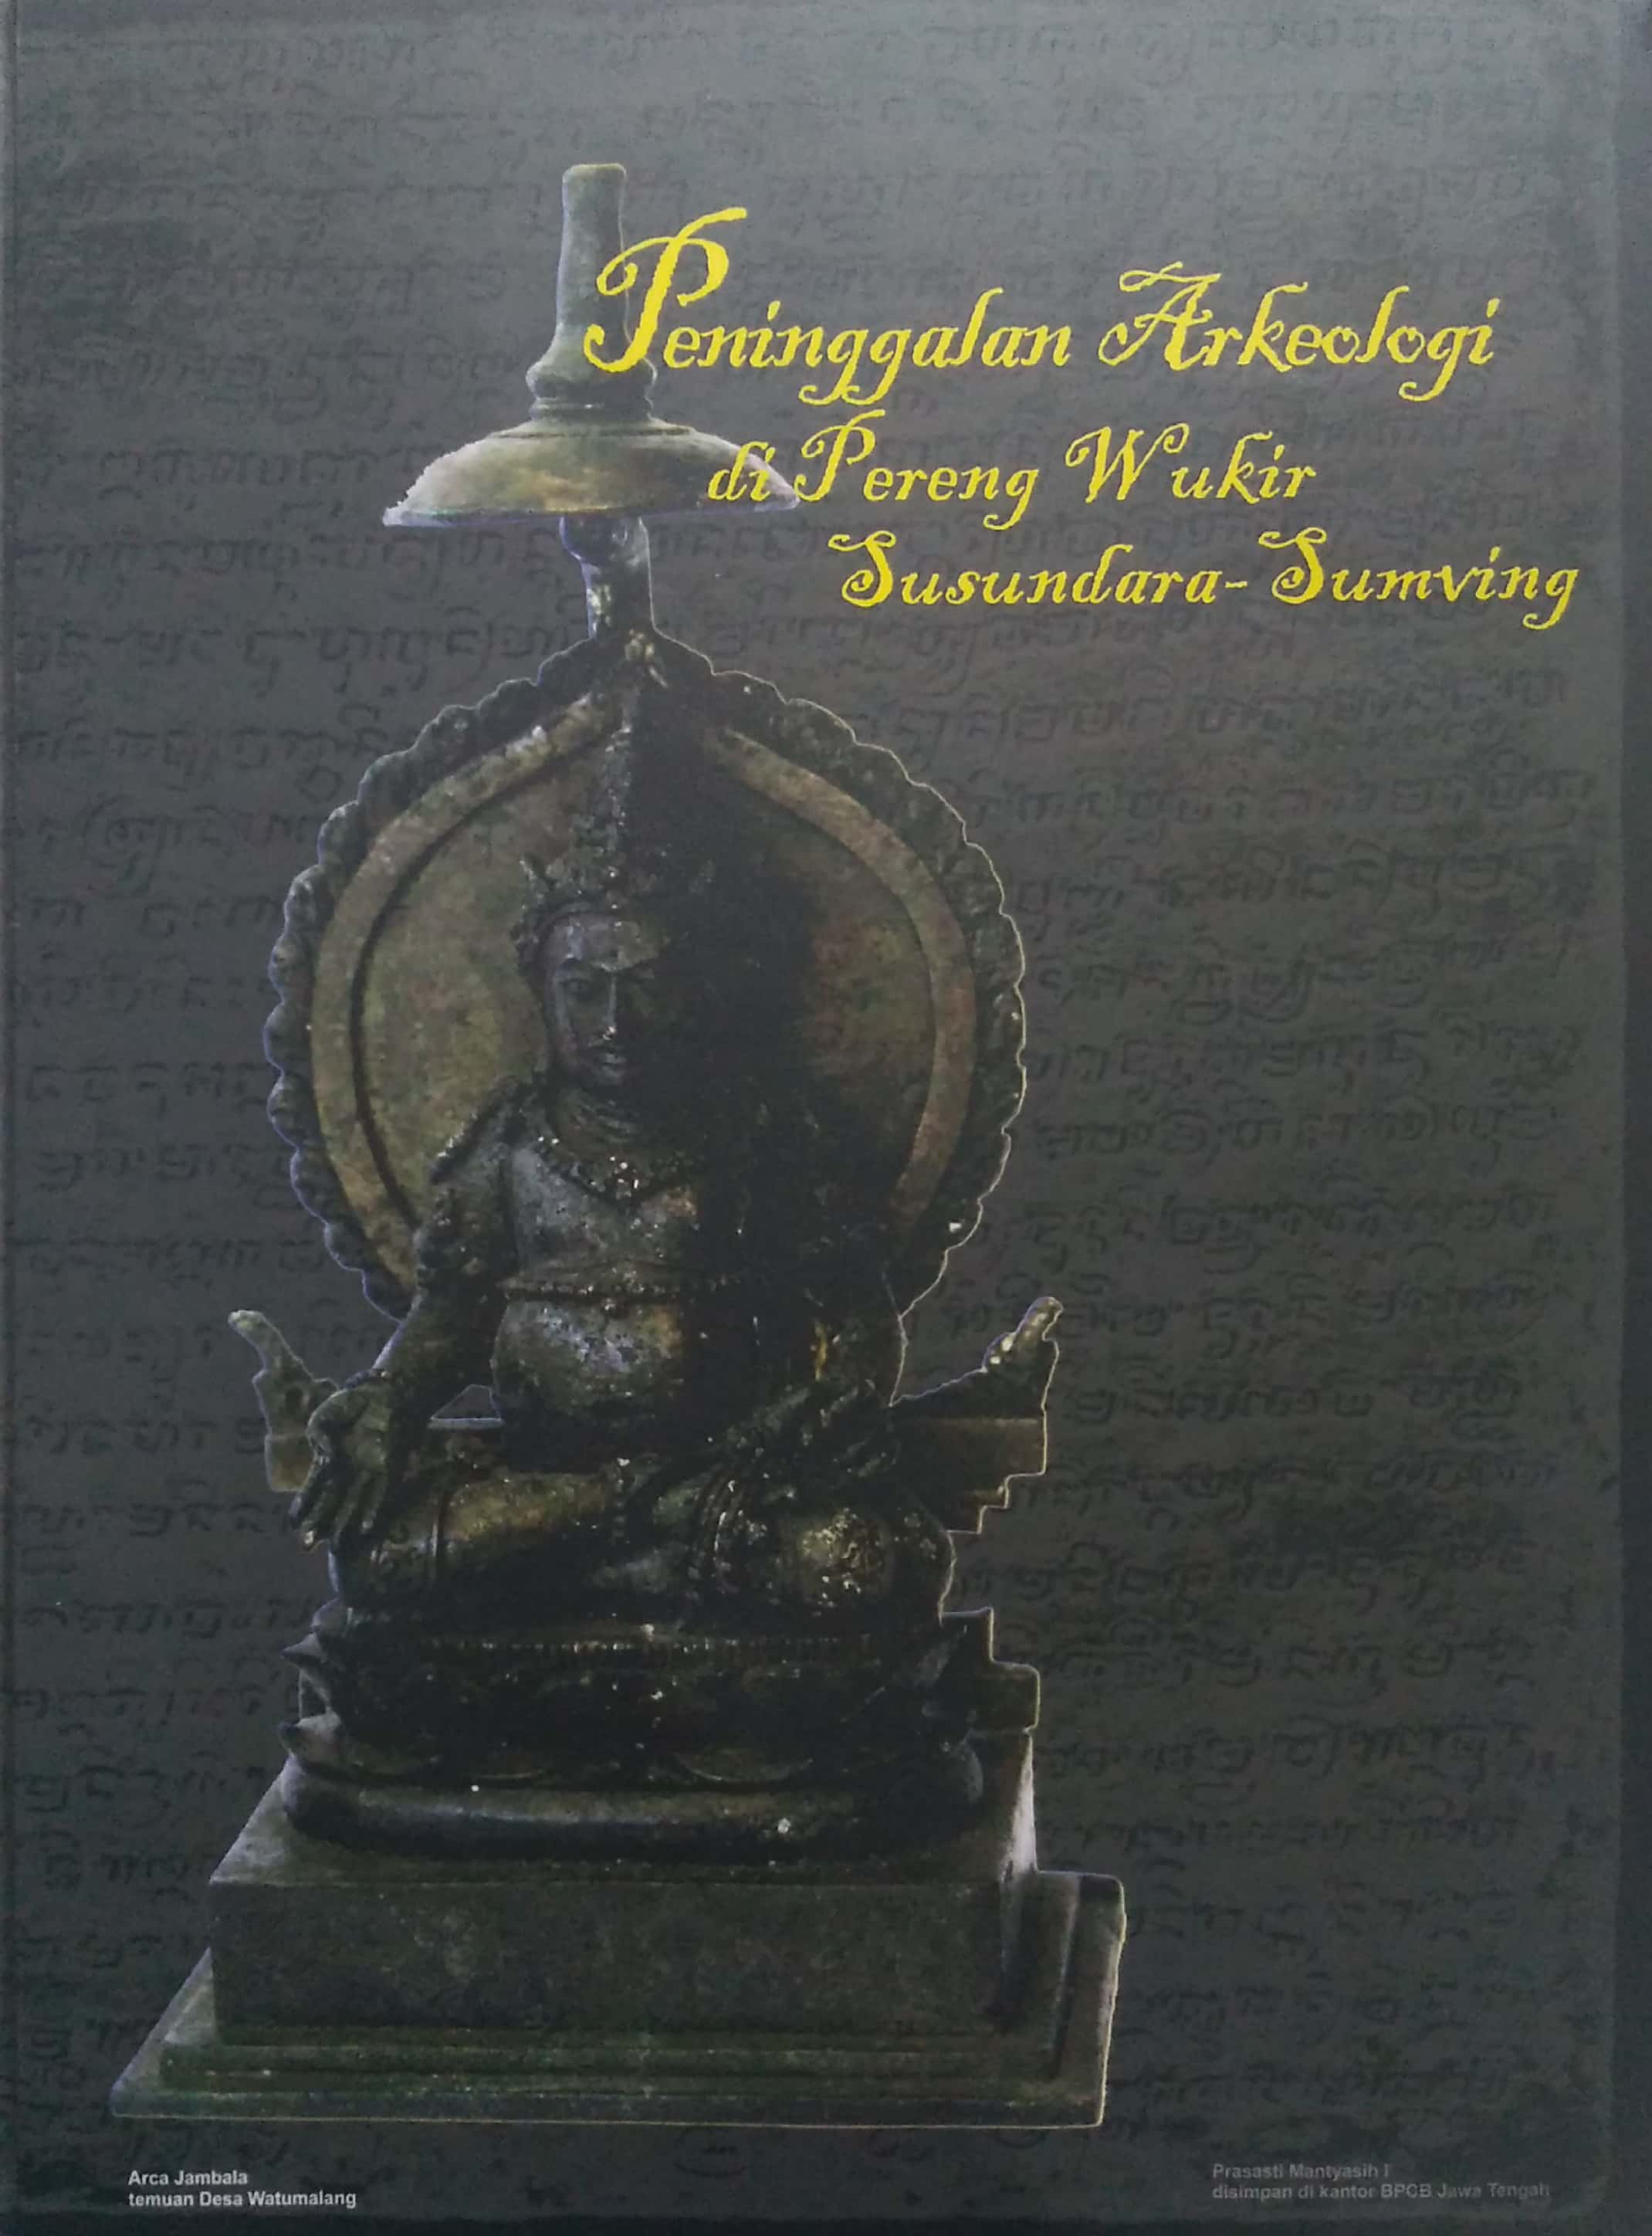 You are currently viewing Buku “Peninggalan Arkeologi di Pereng Wukir Susundara-Sumving” Bisa Dimiliki Masyarakat